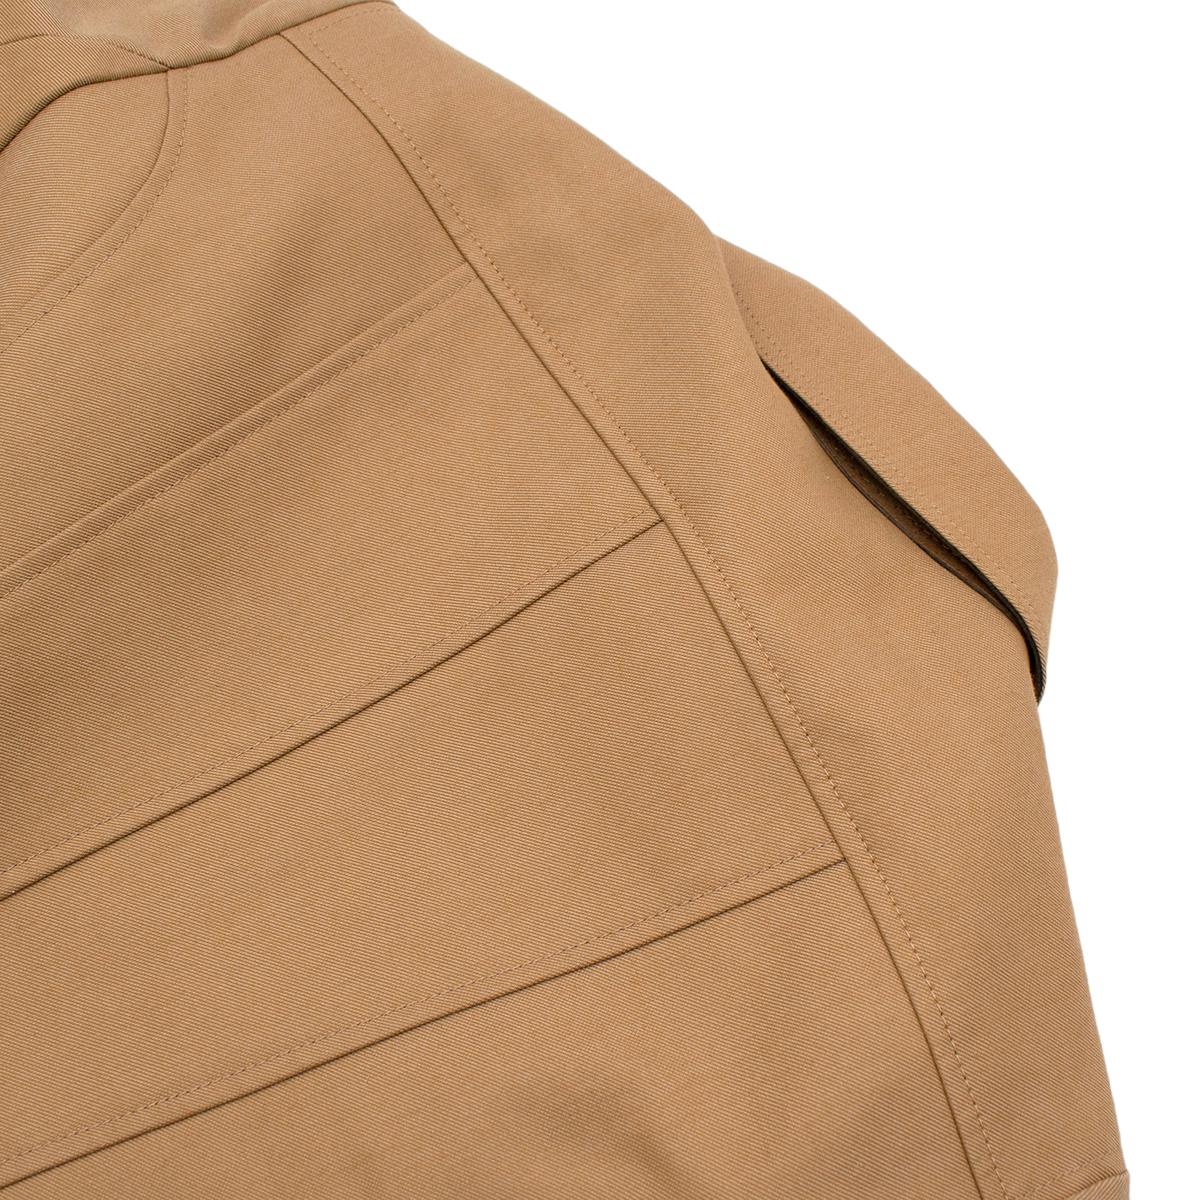 Burberry Prorsum Beige Tailored Safari Jacket - US size 2 3